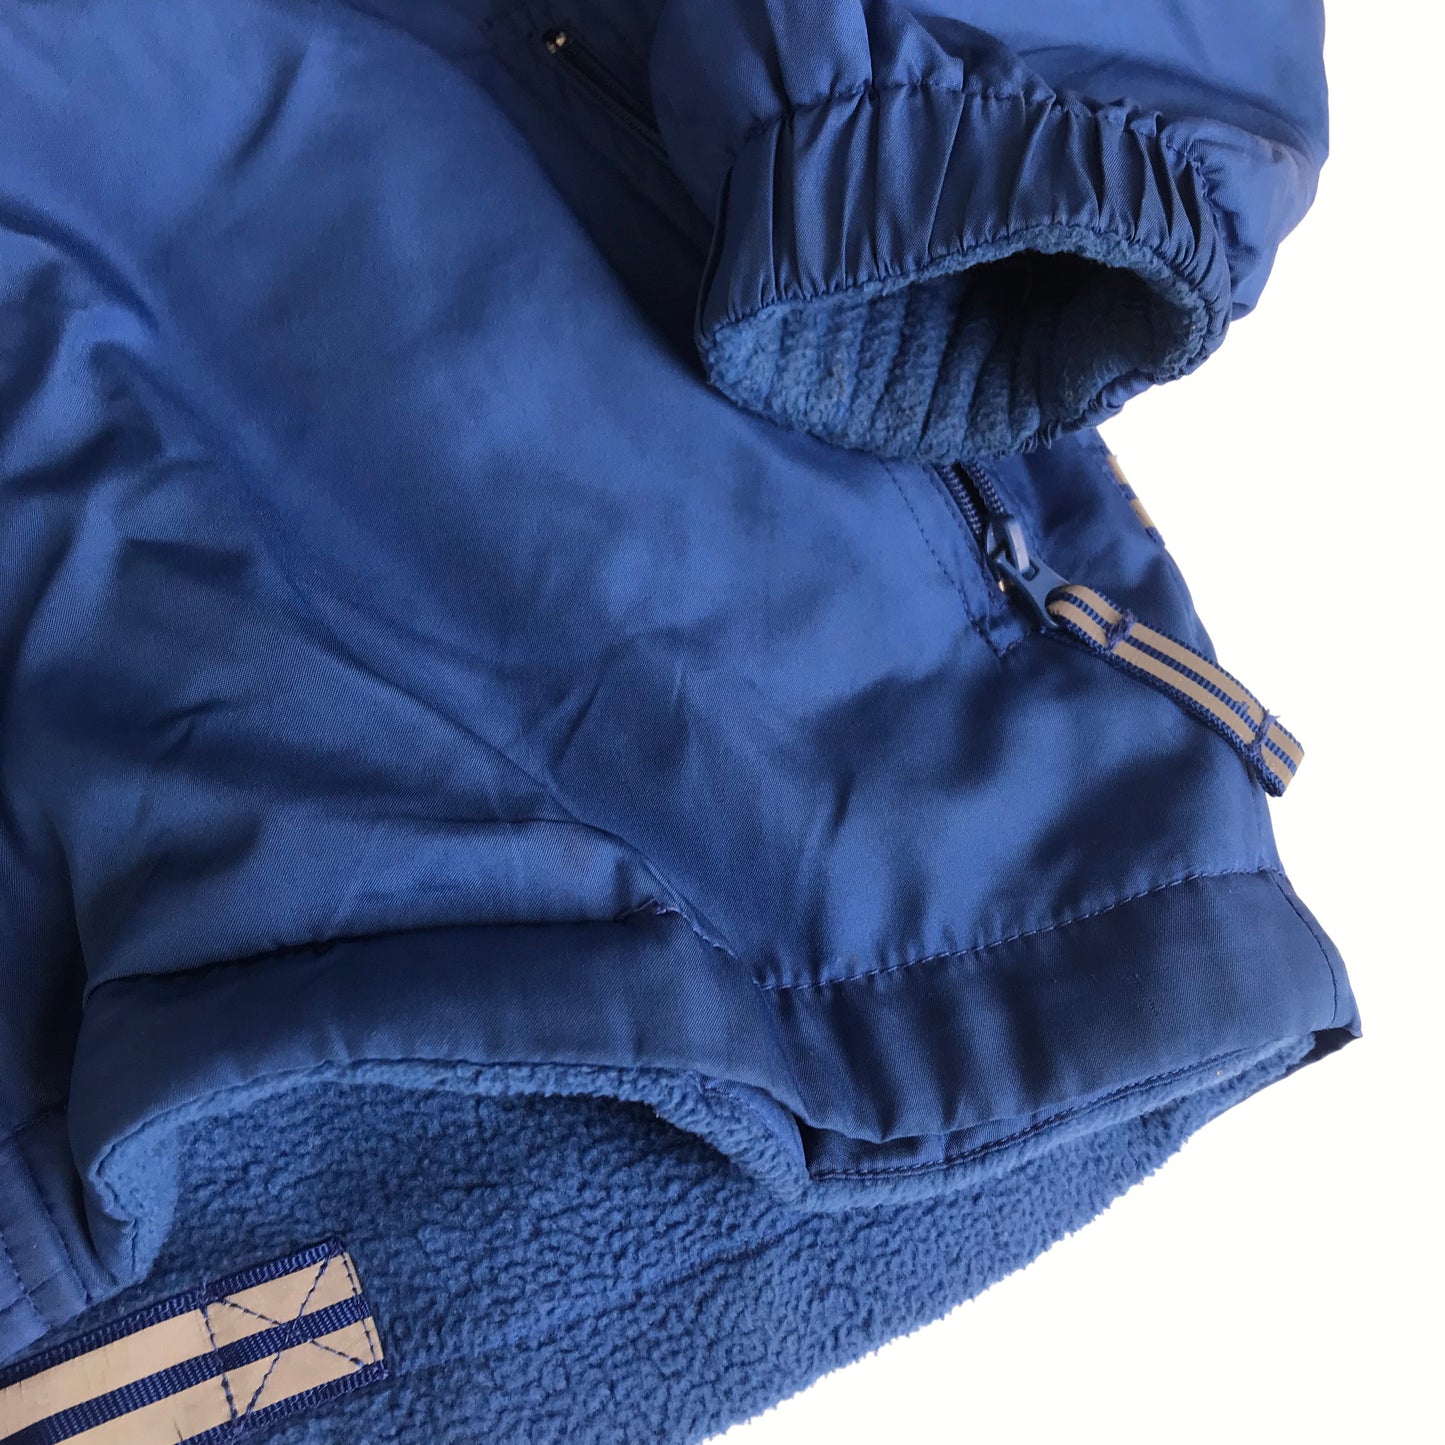 Pirie Park Royal Blue Fleece lined Jacket